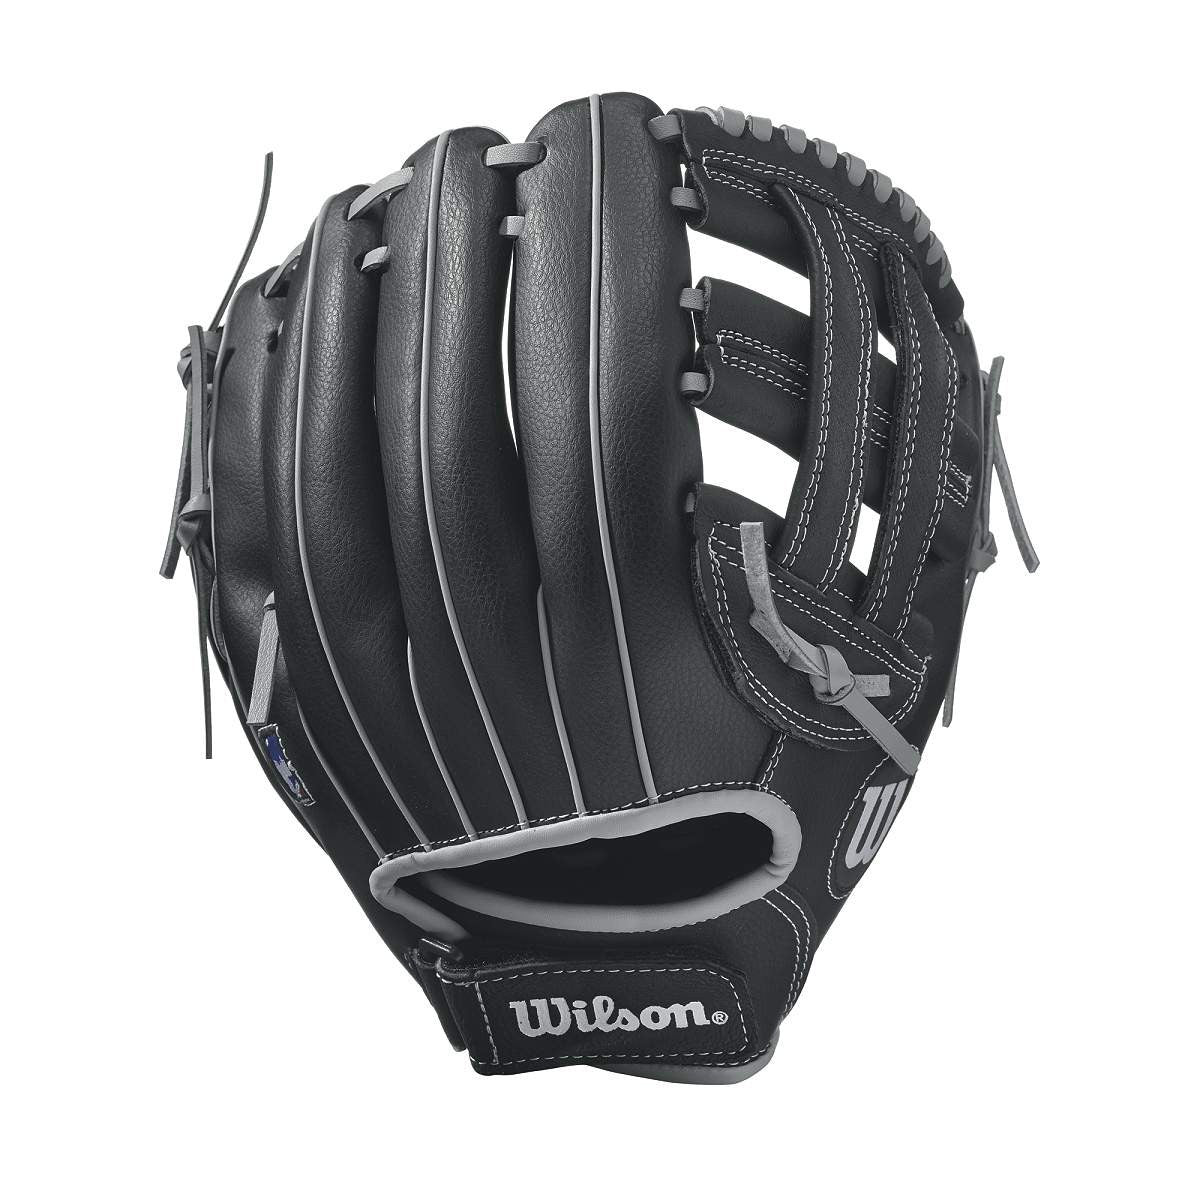 Wilson A360 11.5" Utility Baseball Glove - Right Hand Throw